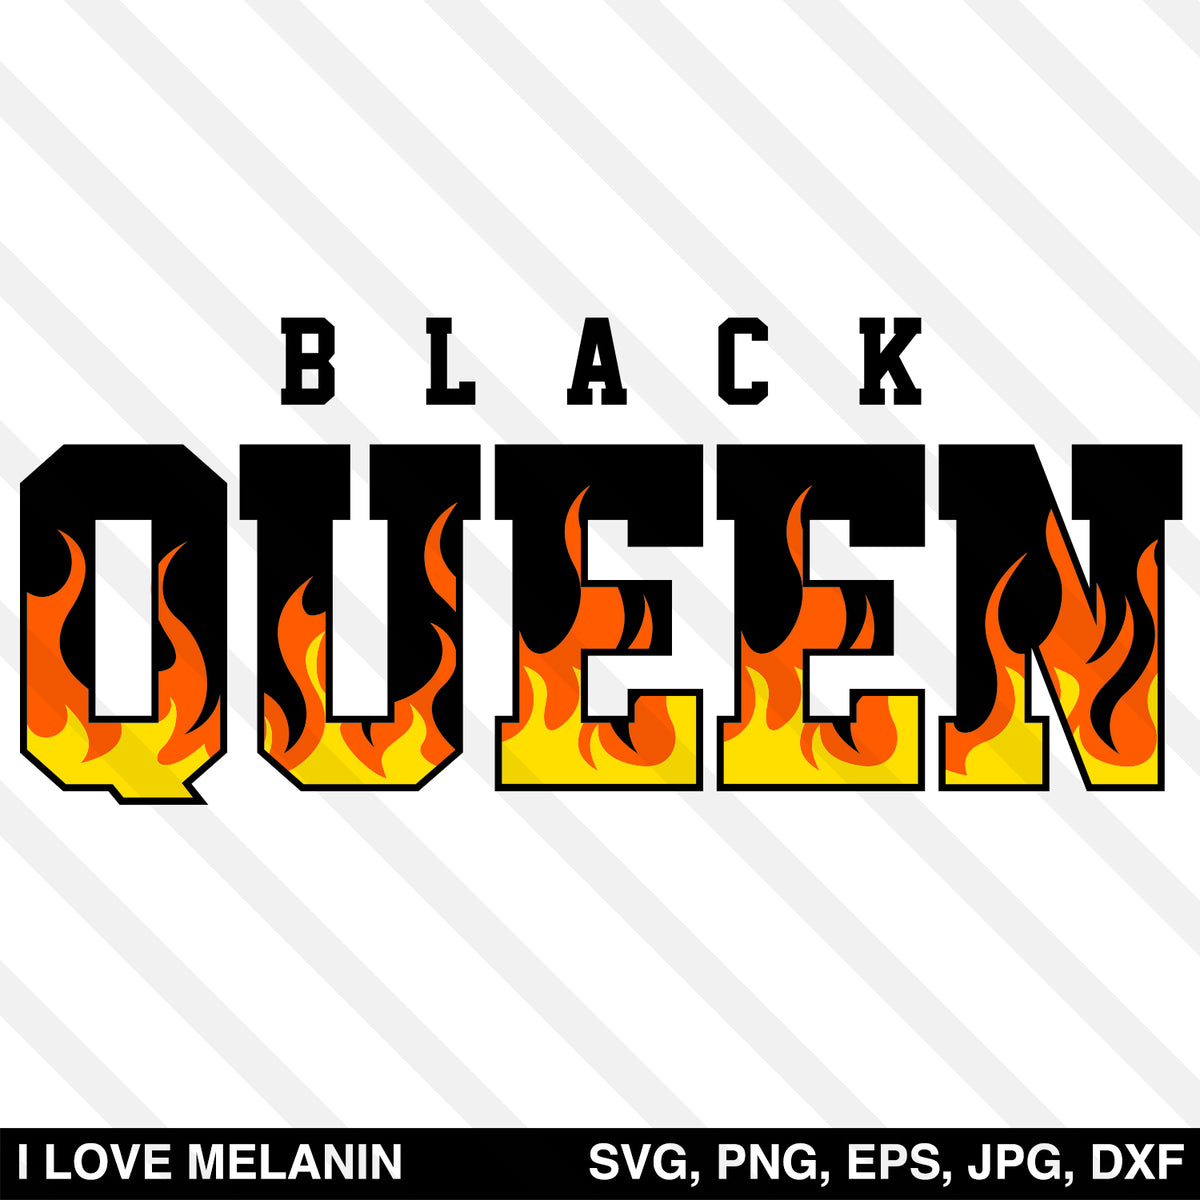 Download Black Queen Fire SVG - I Love Melanin